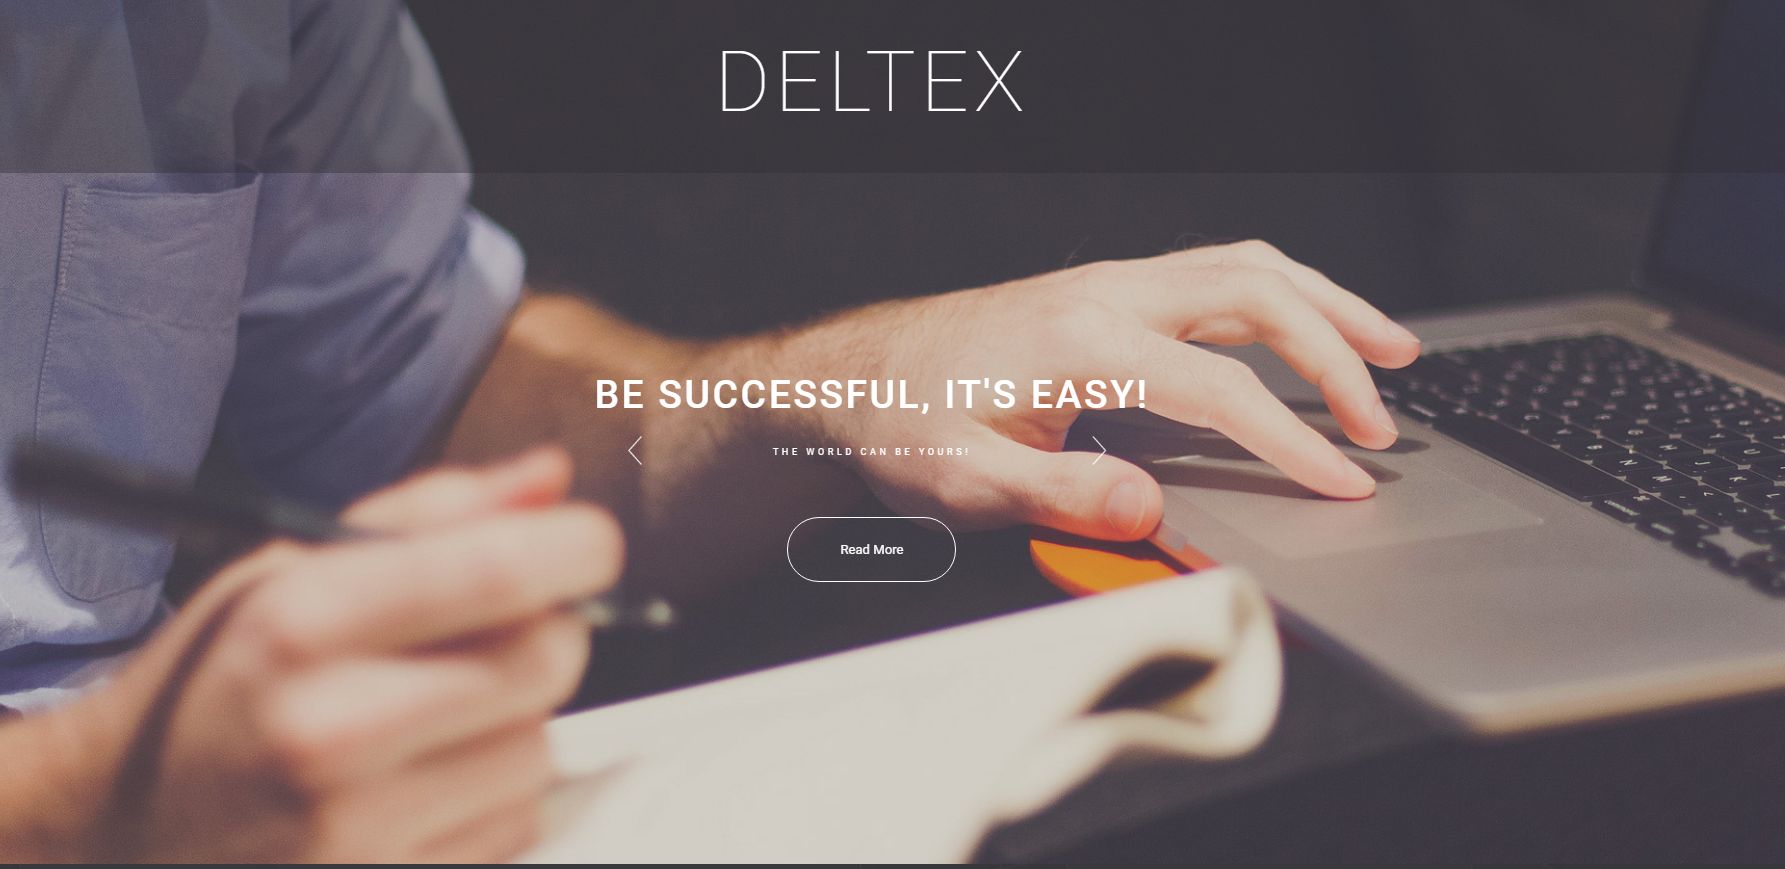 Deltex WordPress Theme